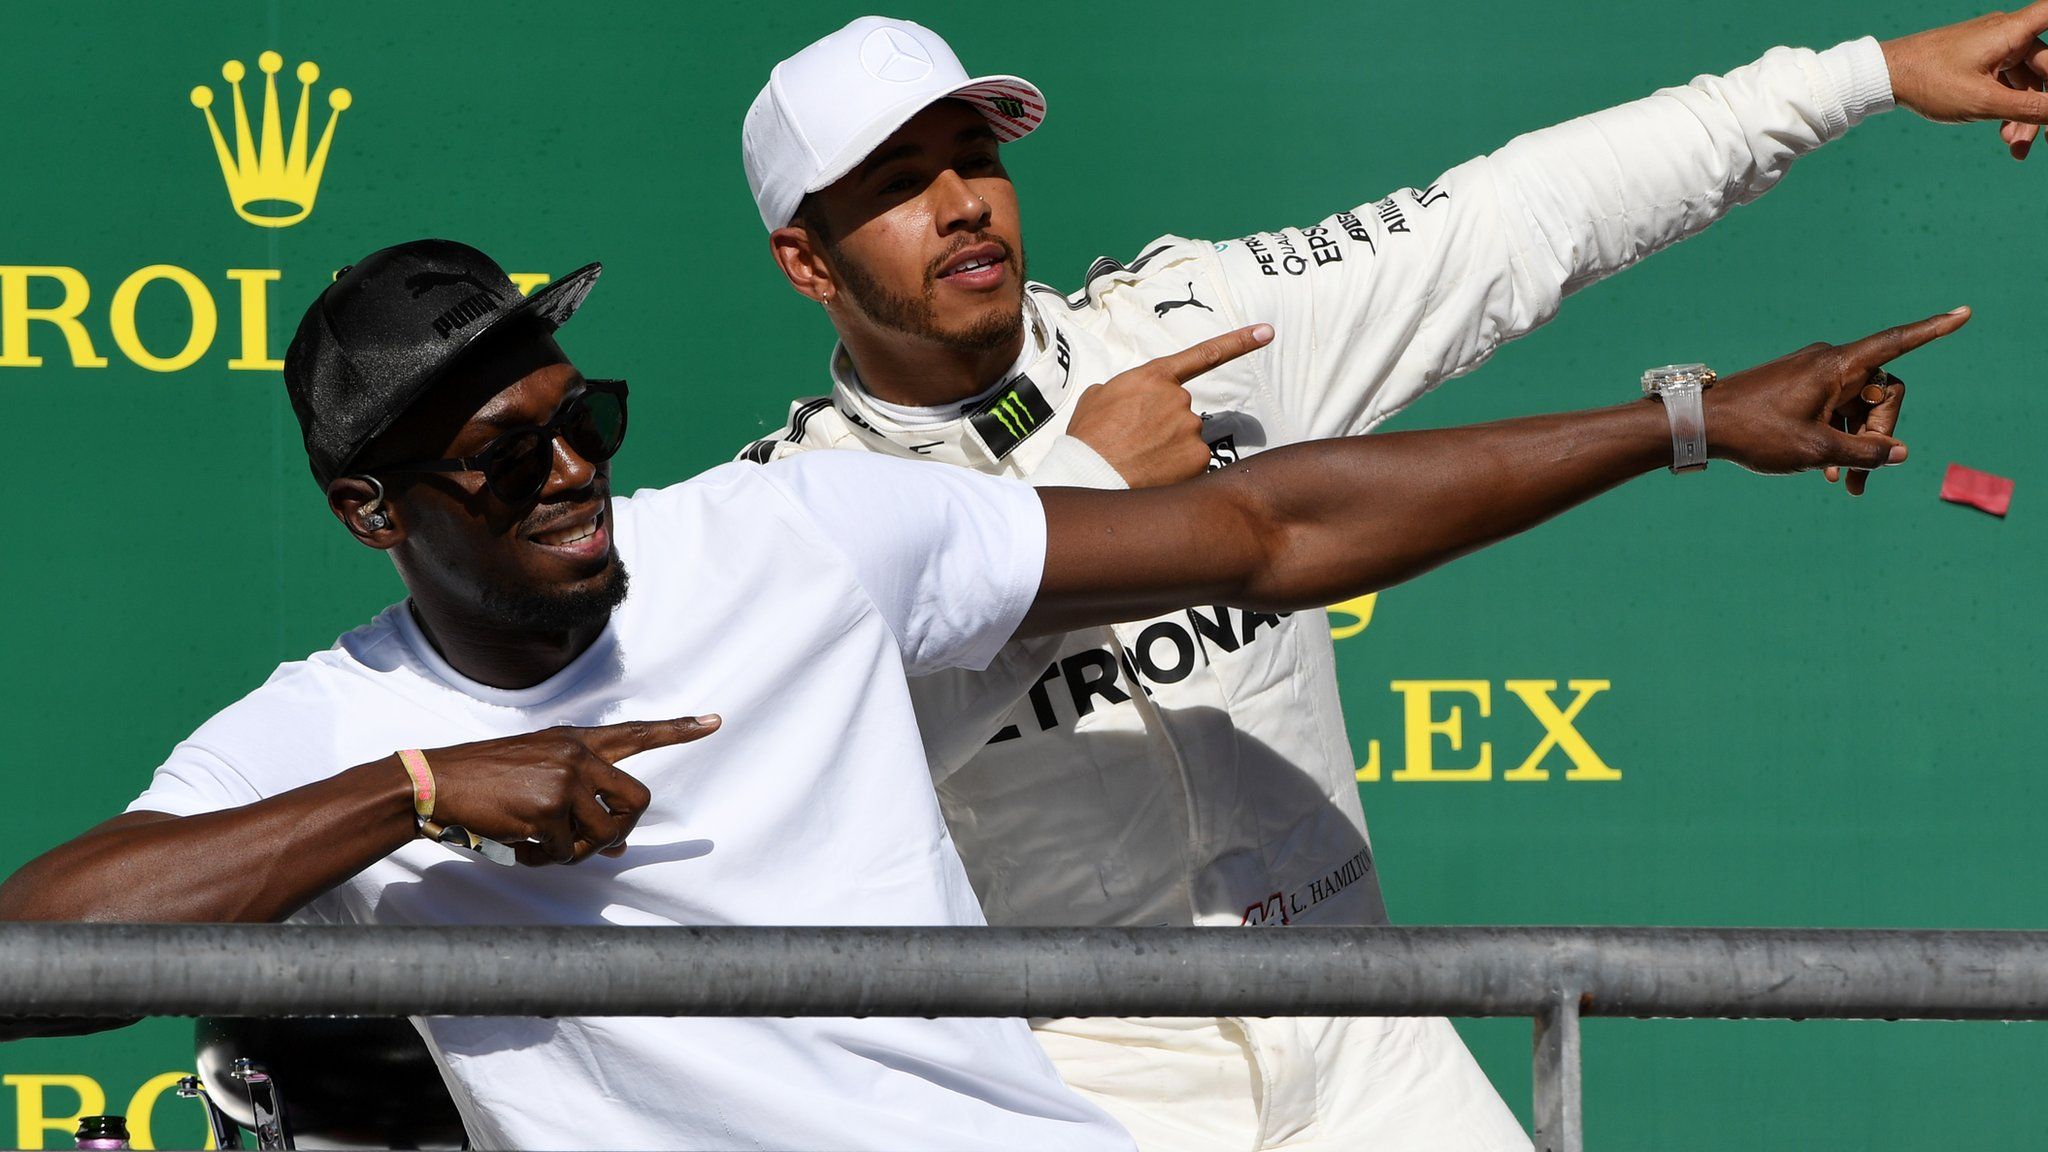 Usain Bolt and Lewis Hamilton